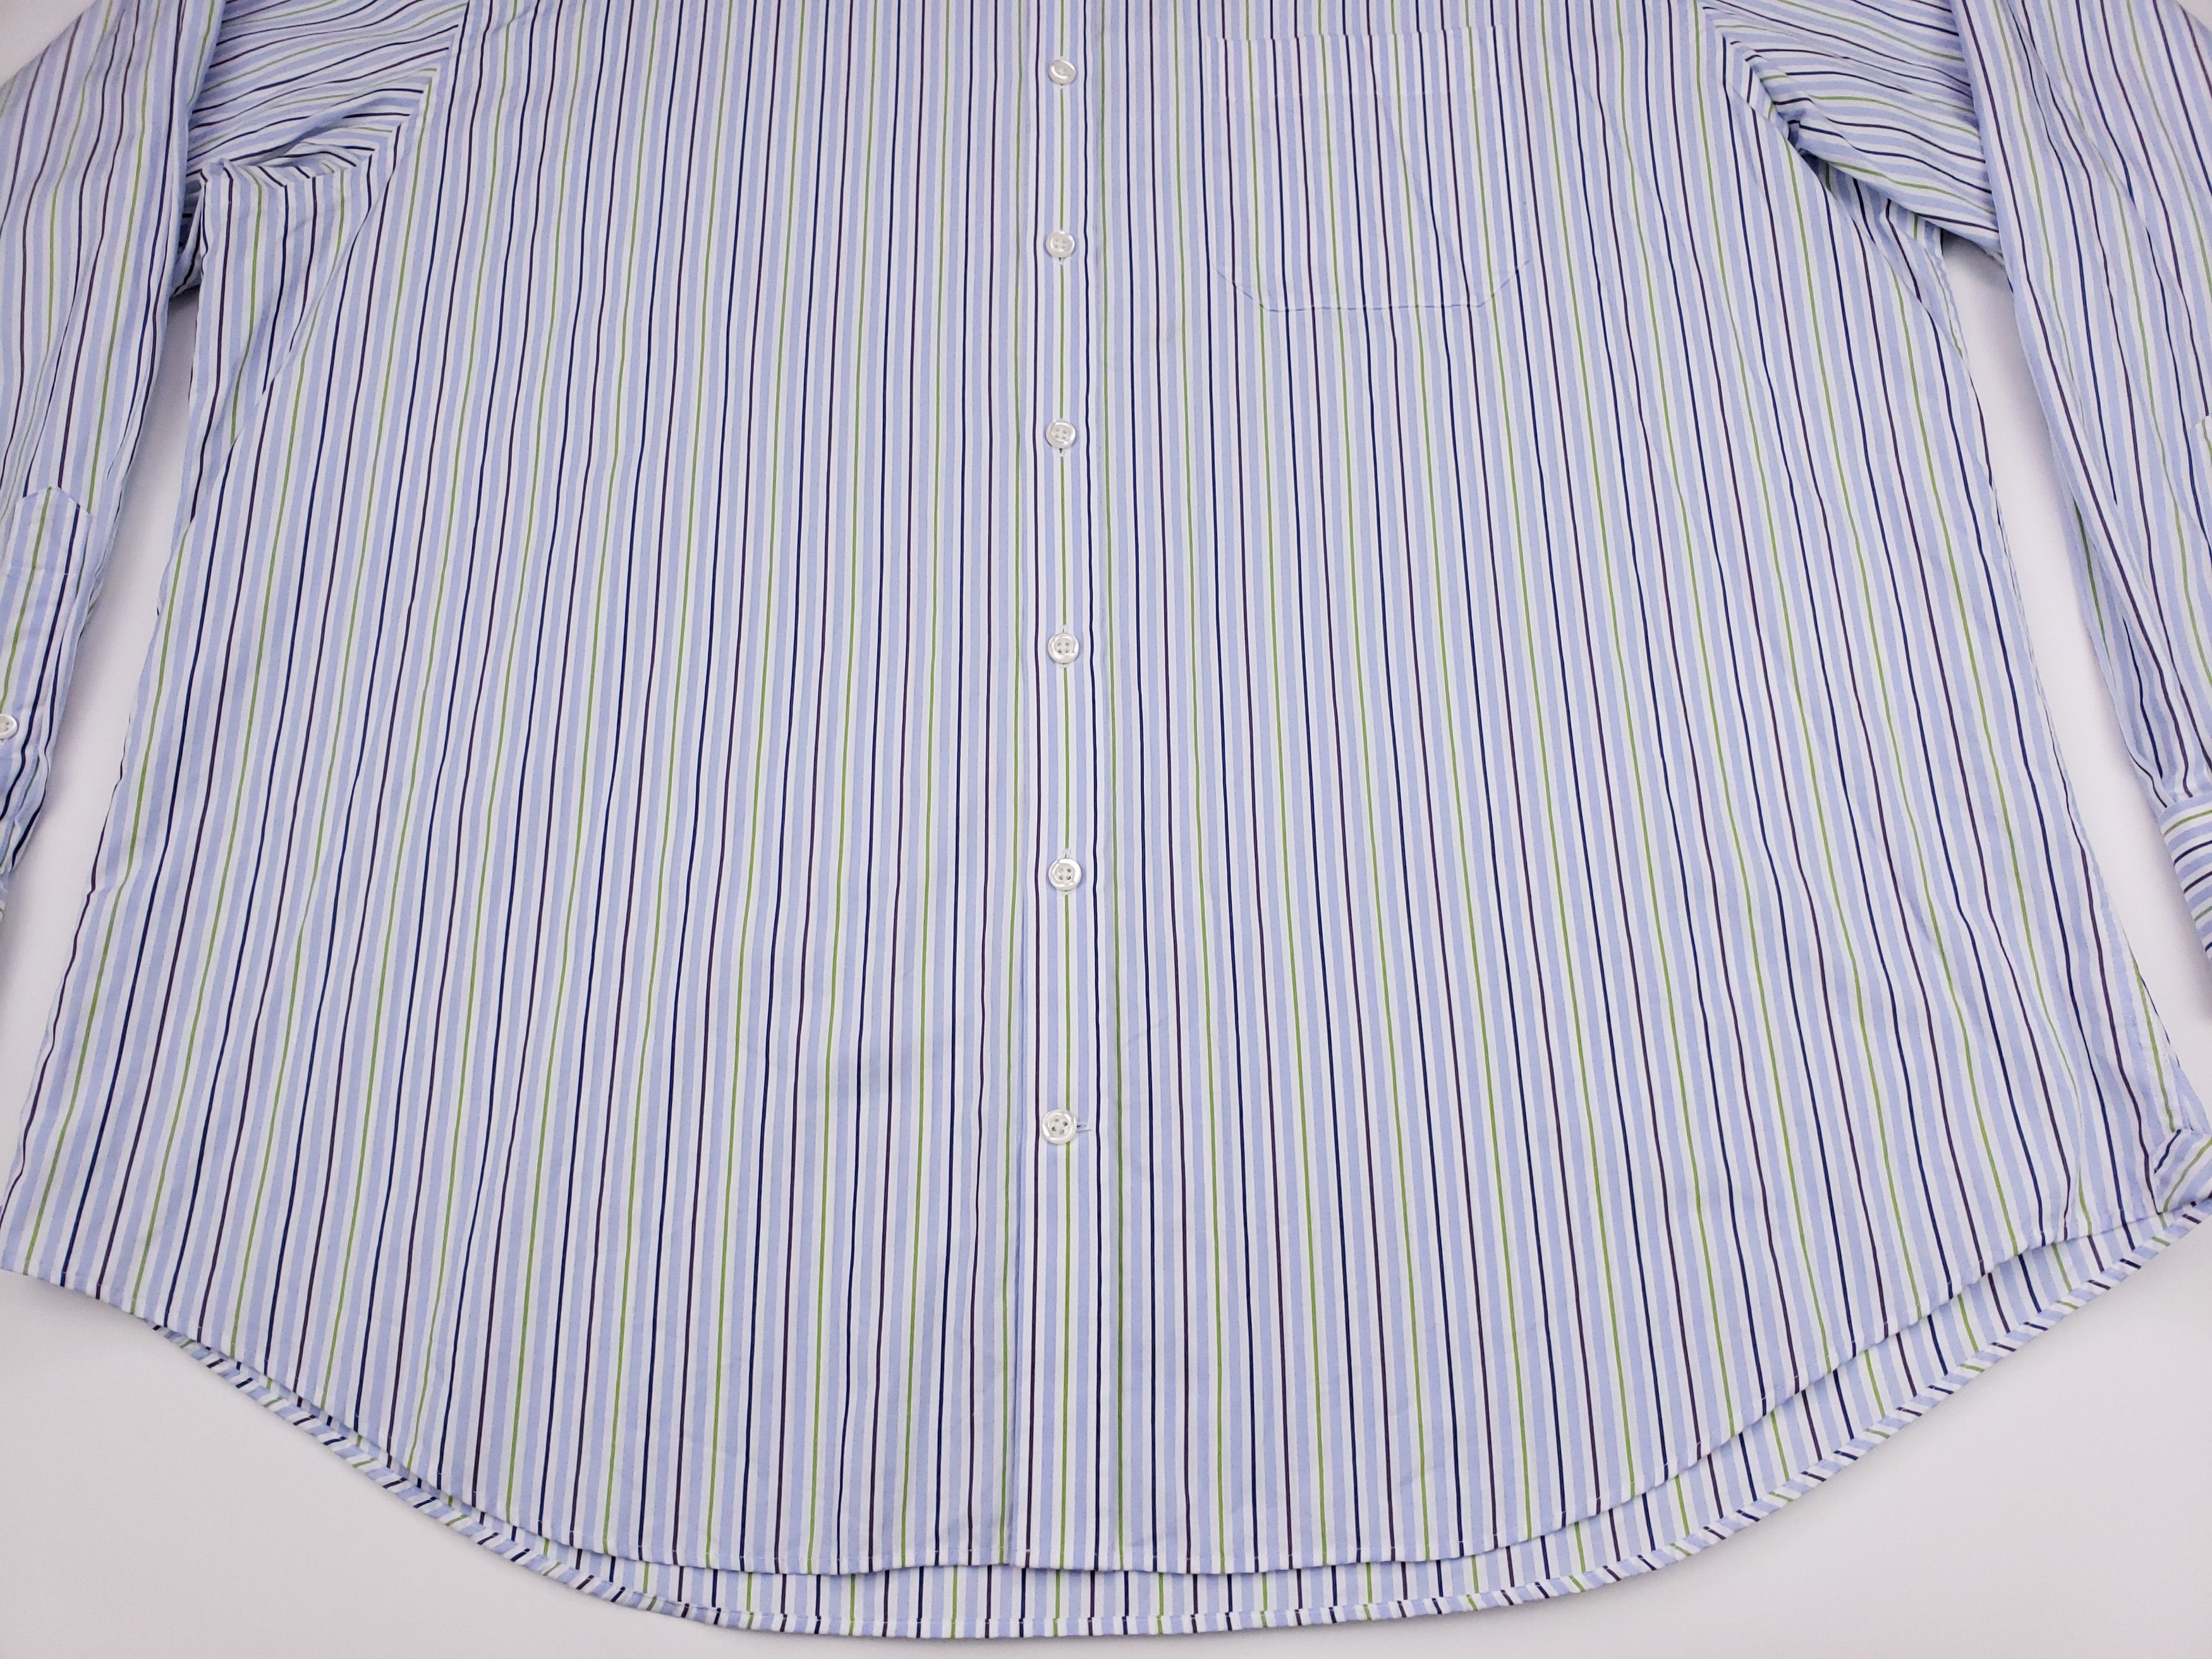 Hawes&Curtis Hawes Curtis Dress Shirt 18 38 Ludlow Striped Mens Size Blu Size US XXL / EU 58 / 5 - 10 Thumbnail